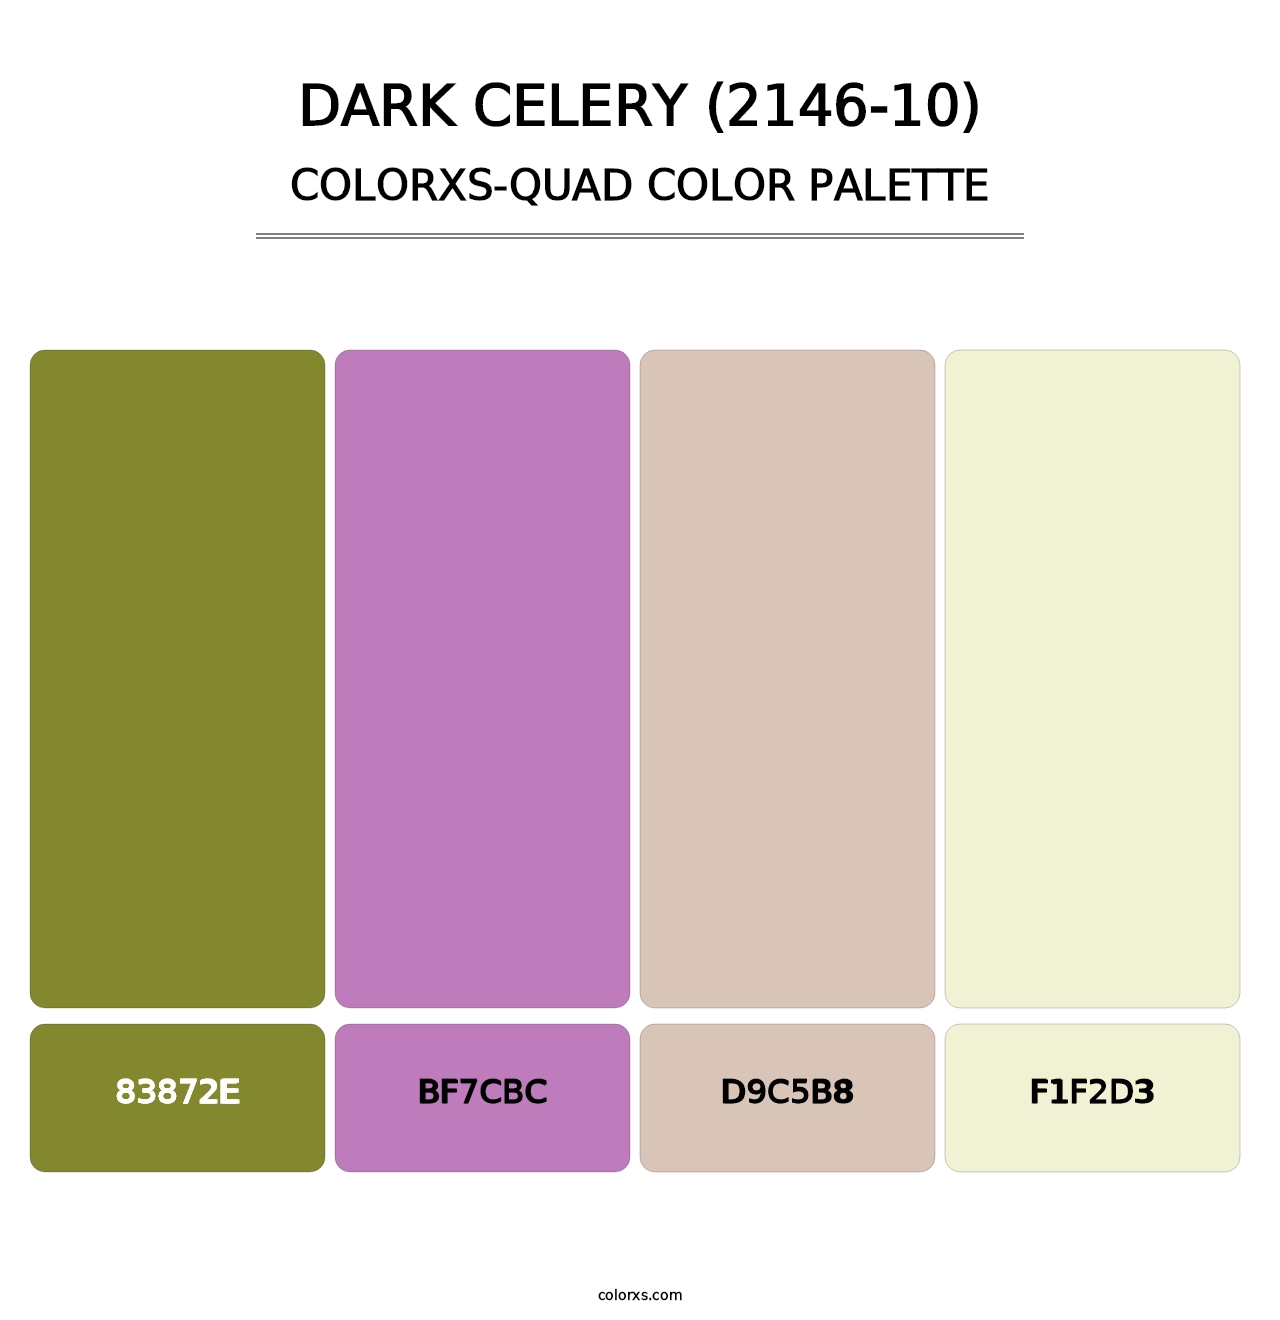 Dark Celery (2146-10) - Colorxs Quad Palette